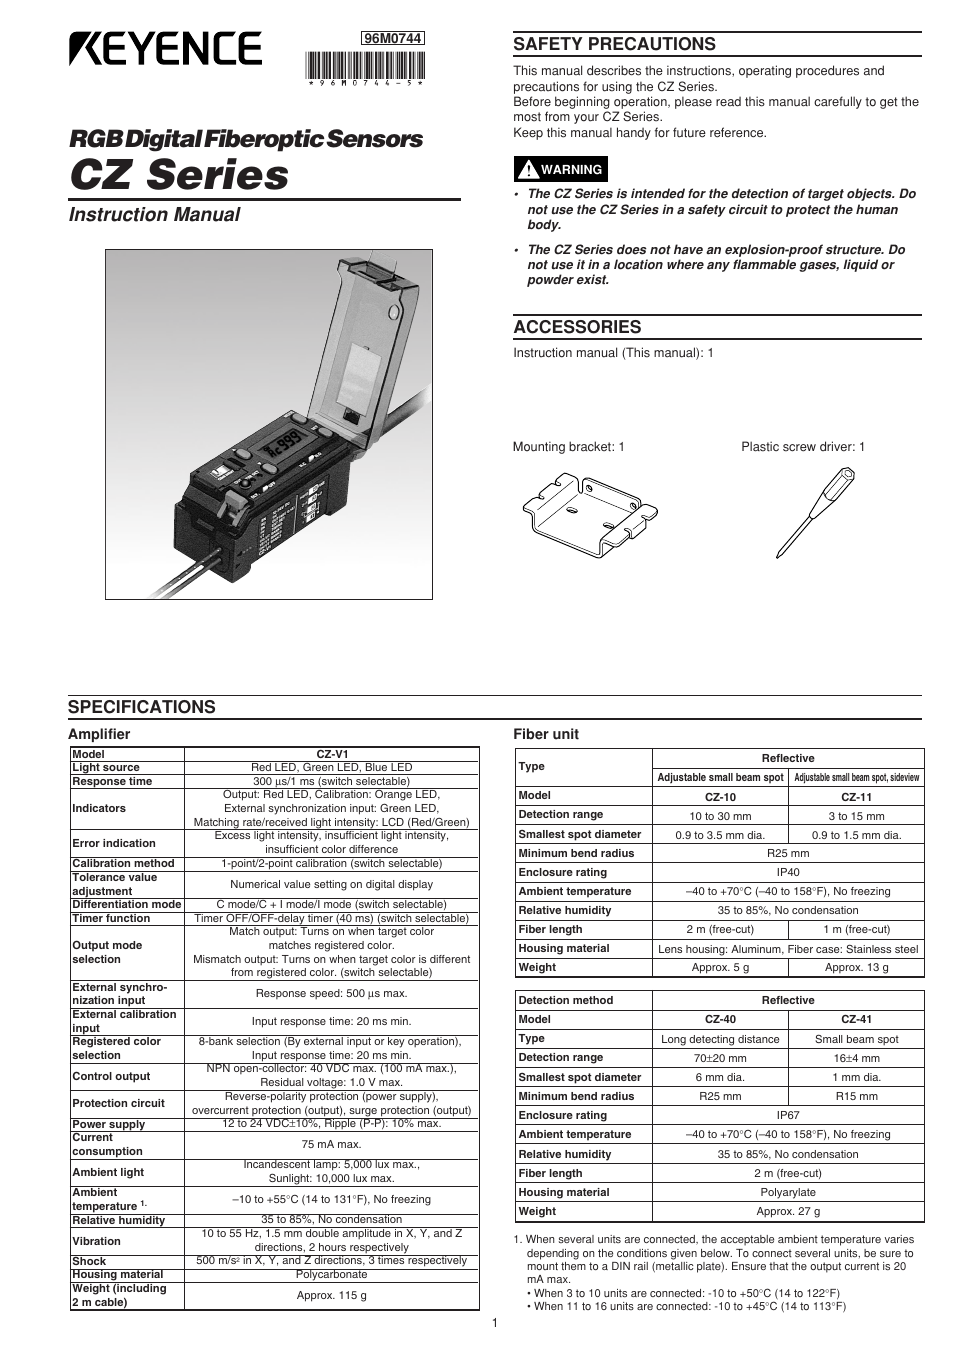 KEYENCE CZ-V1 User Manual | 8 pages | Original mode